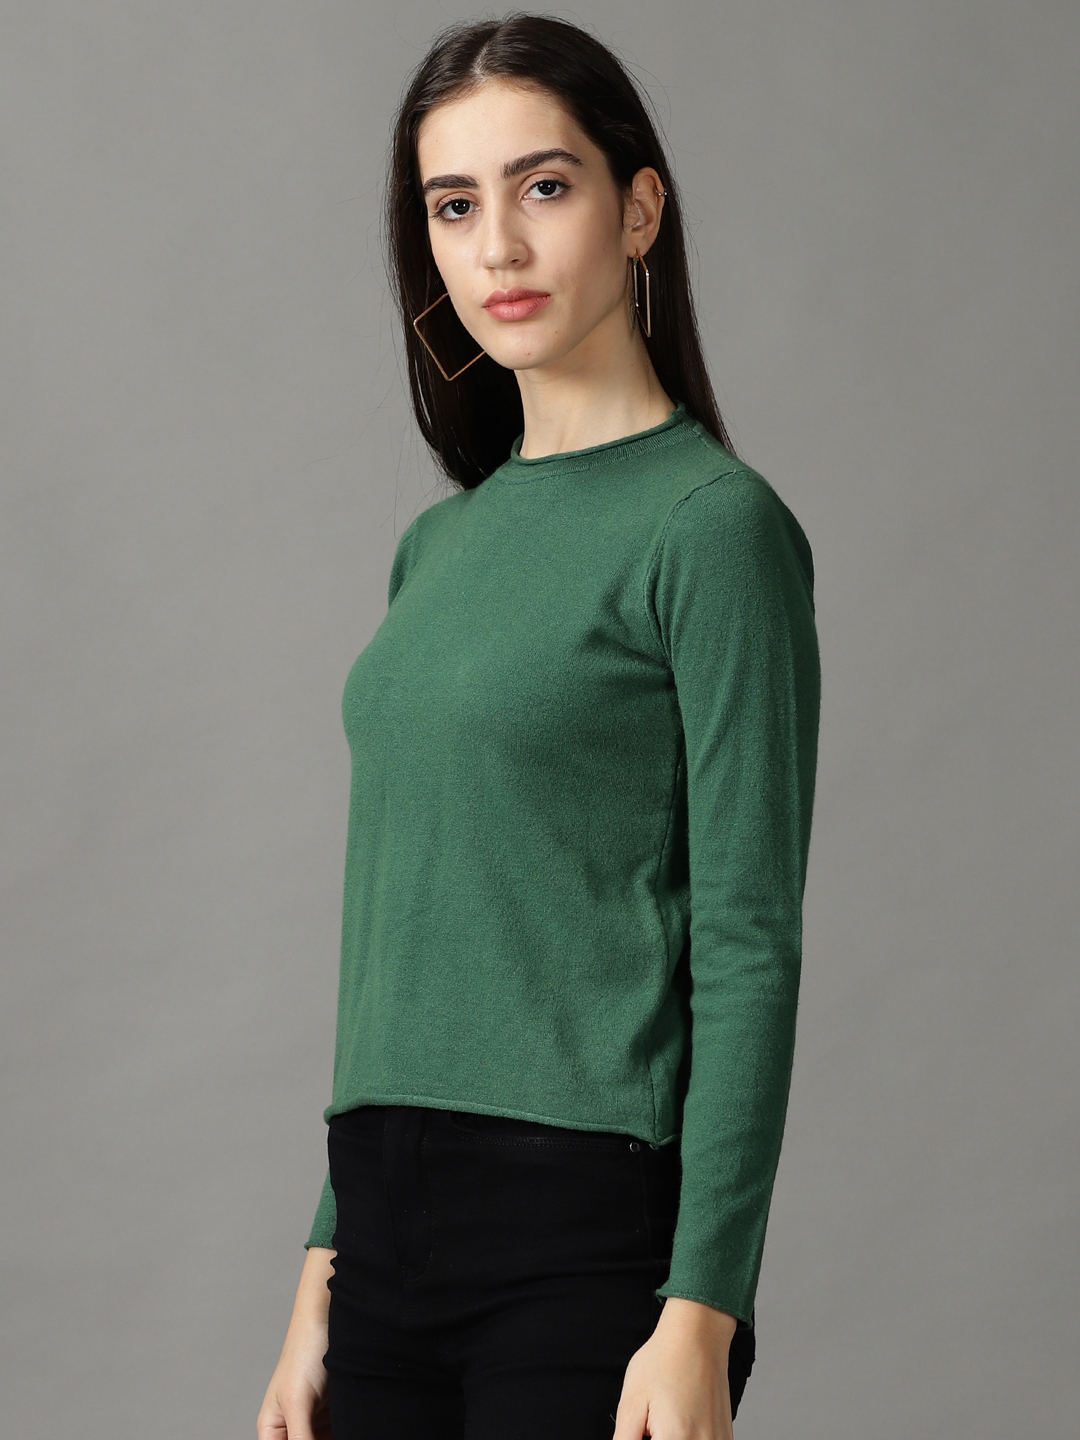 Women's Green Wool Solid Tops